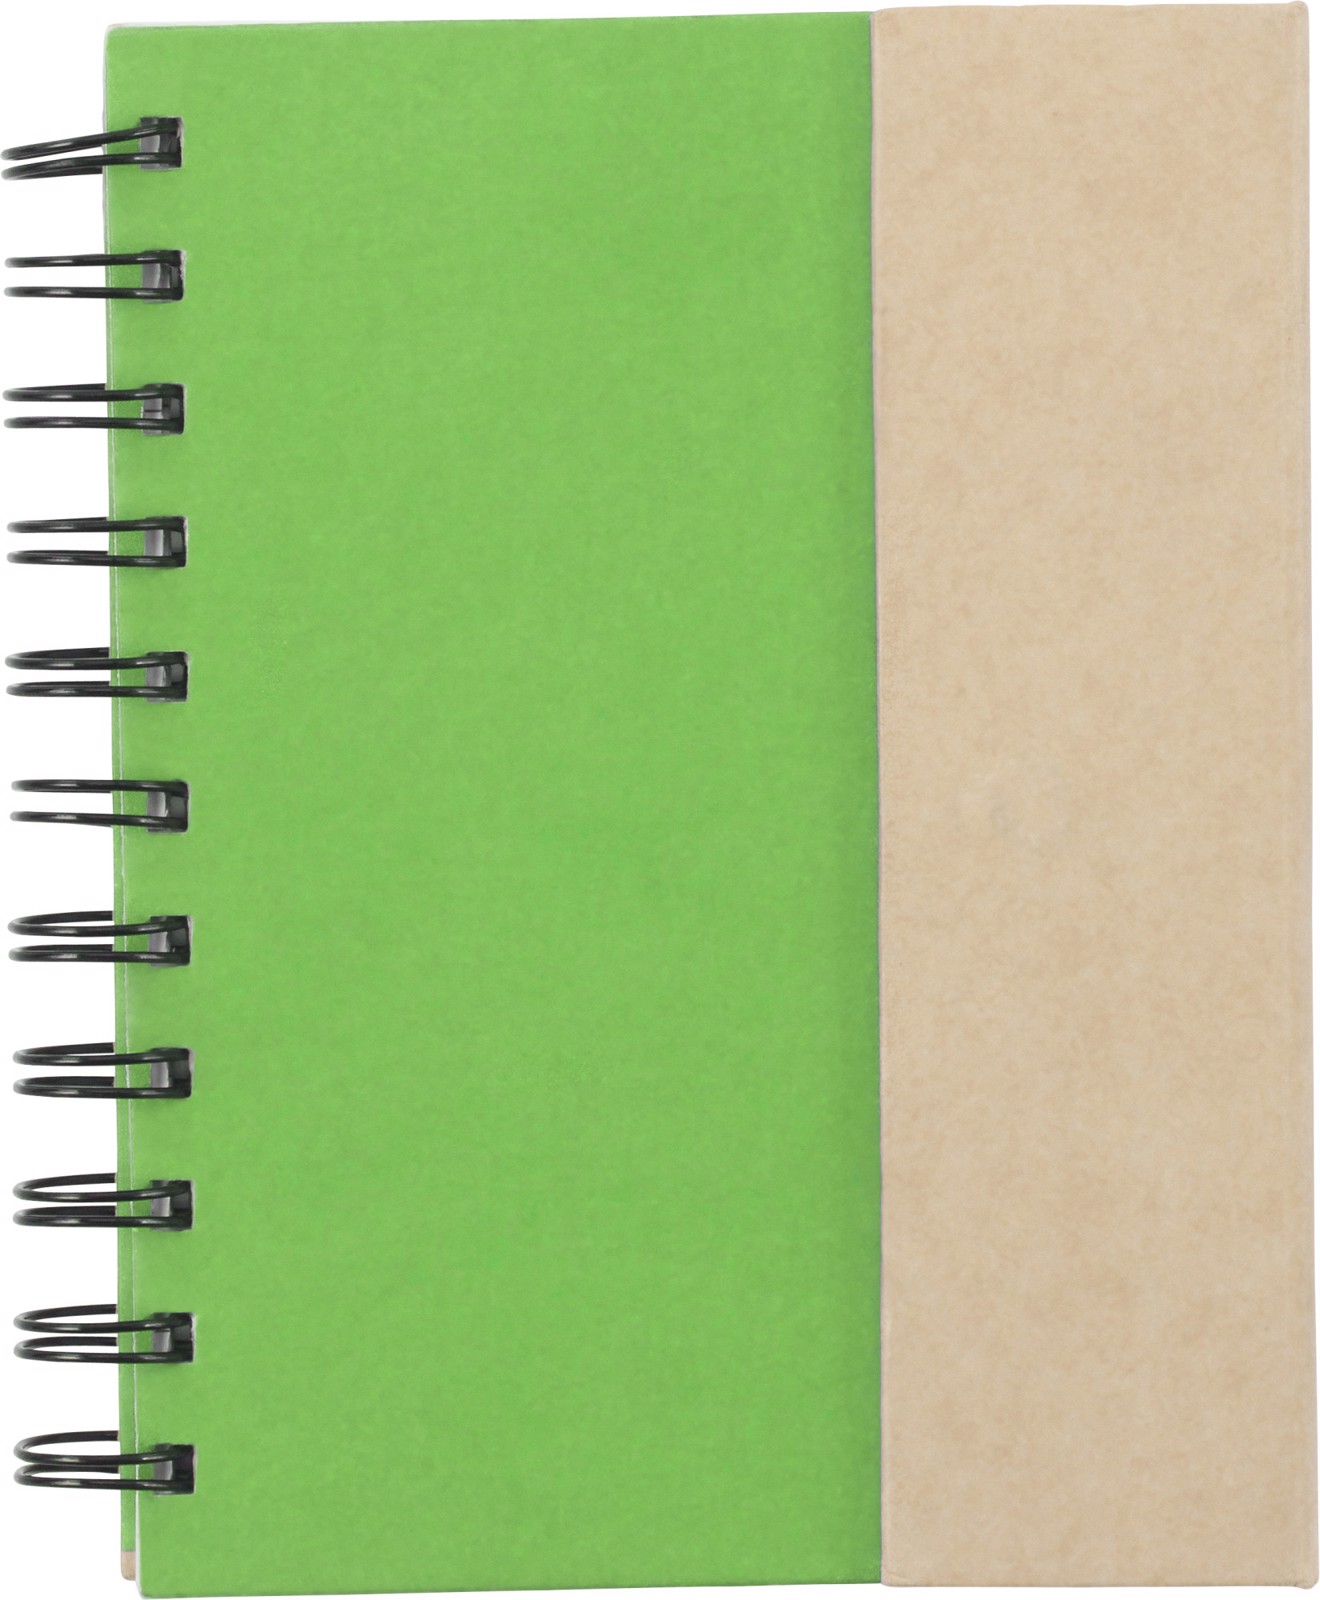 Coardboard notebook - Light Green